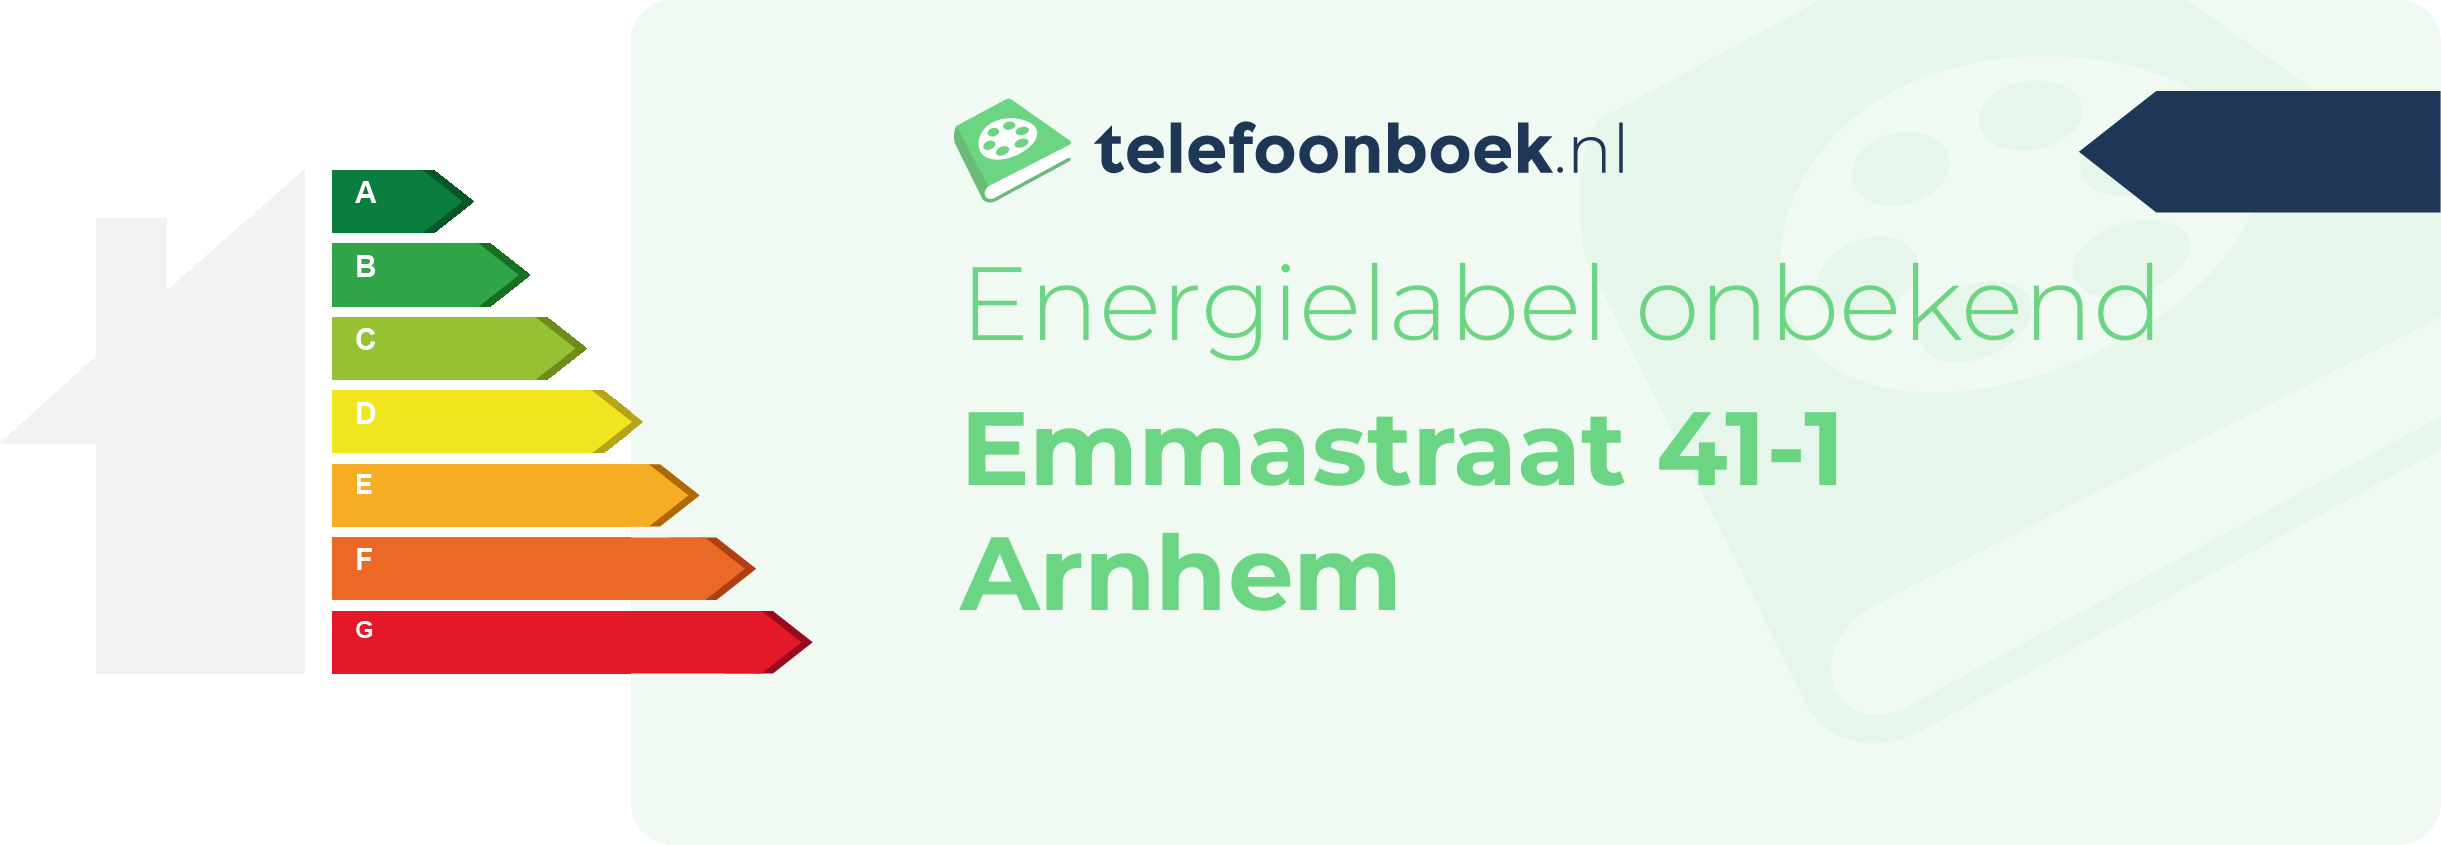 Energielabel Emmastraat 41-1 Arnhem